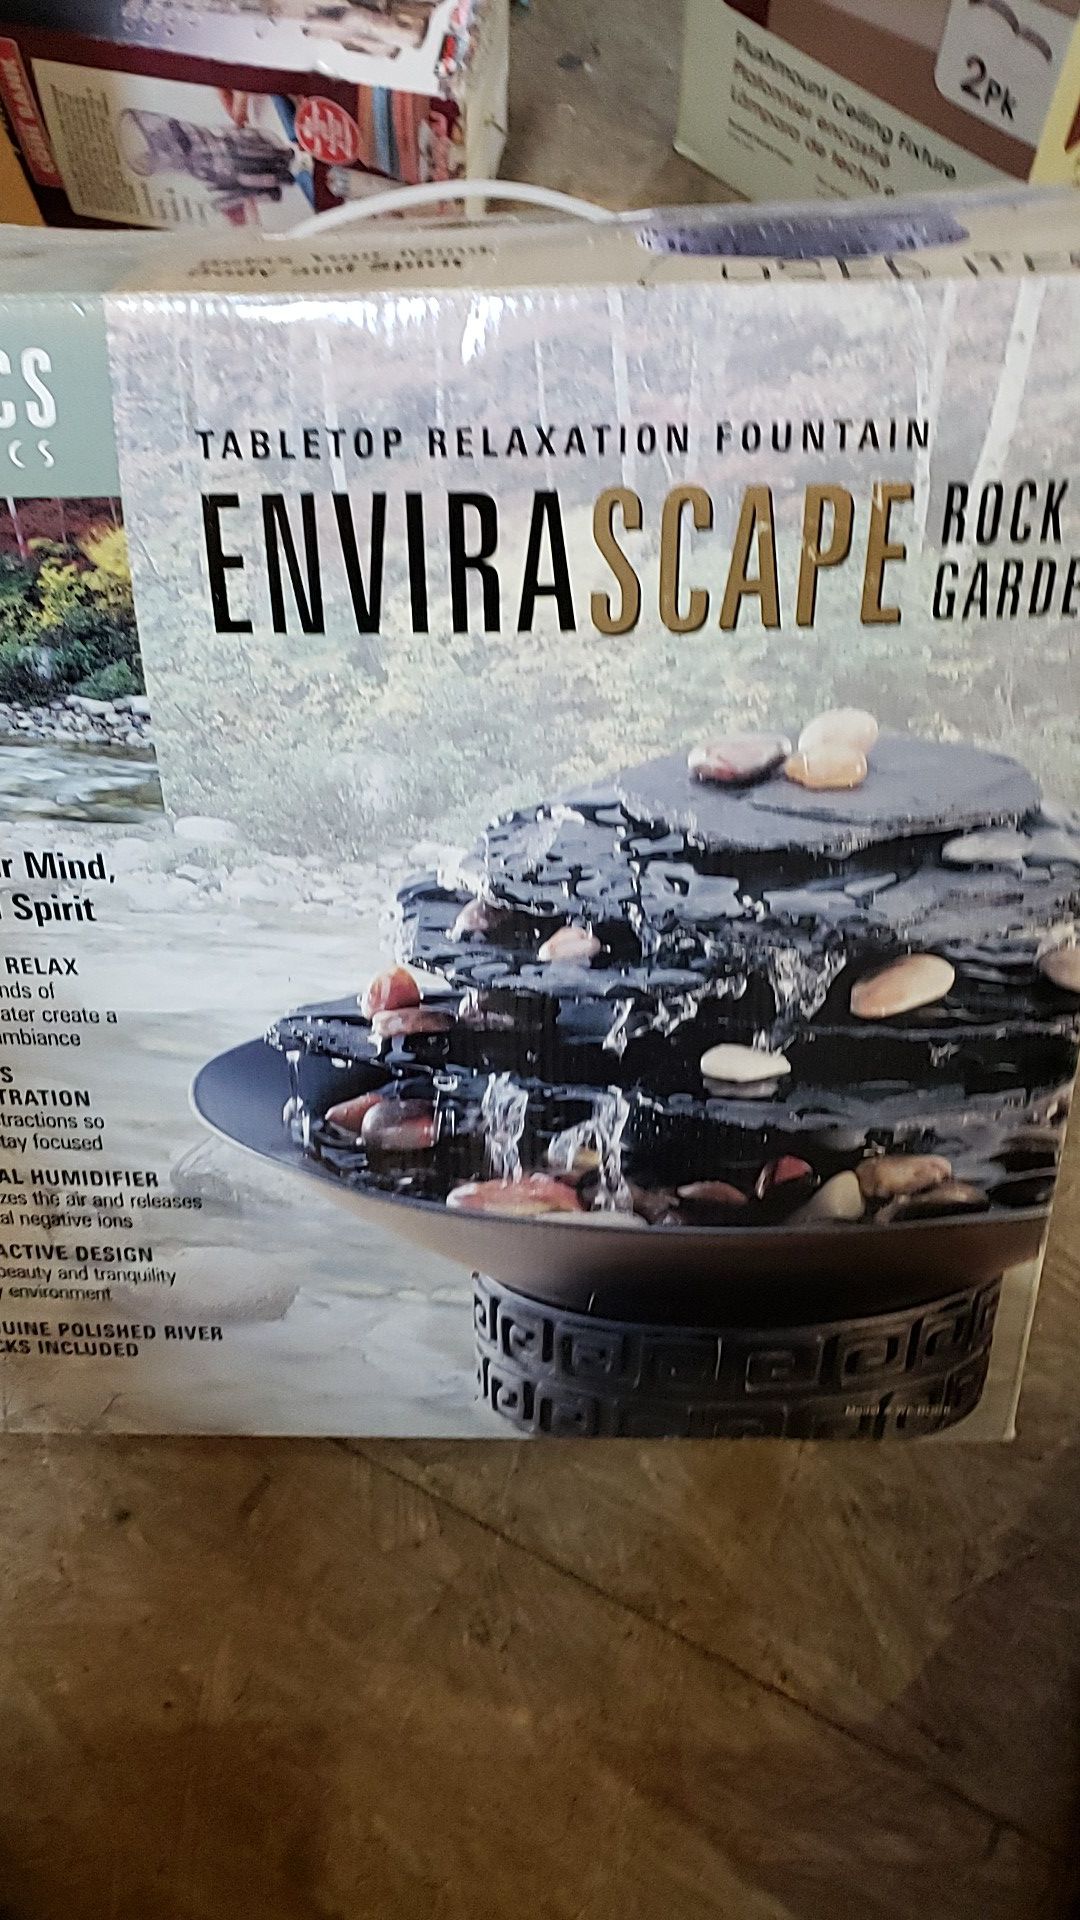 Home Eric's body basics in Vera scape rock garden